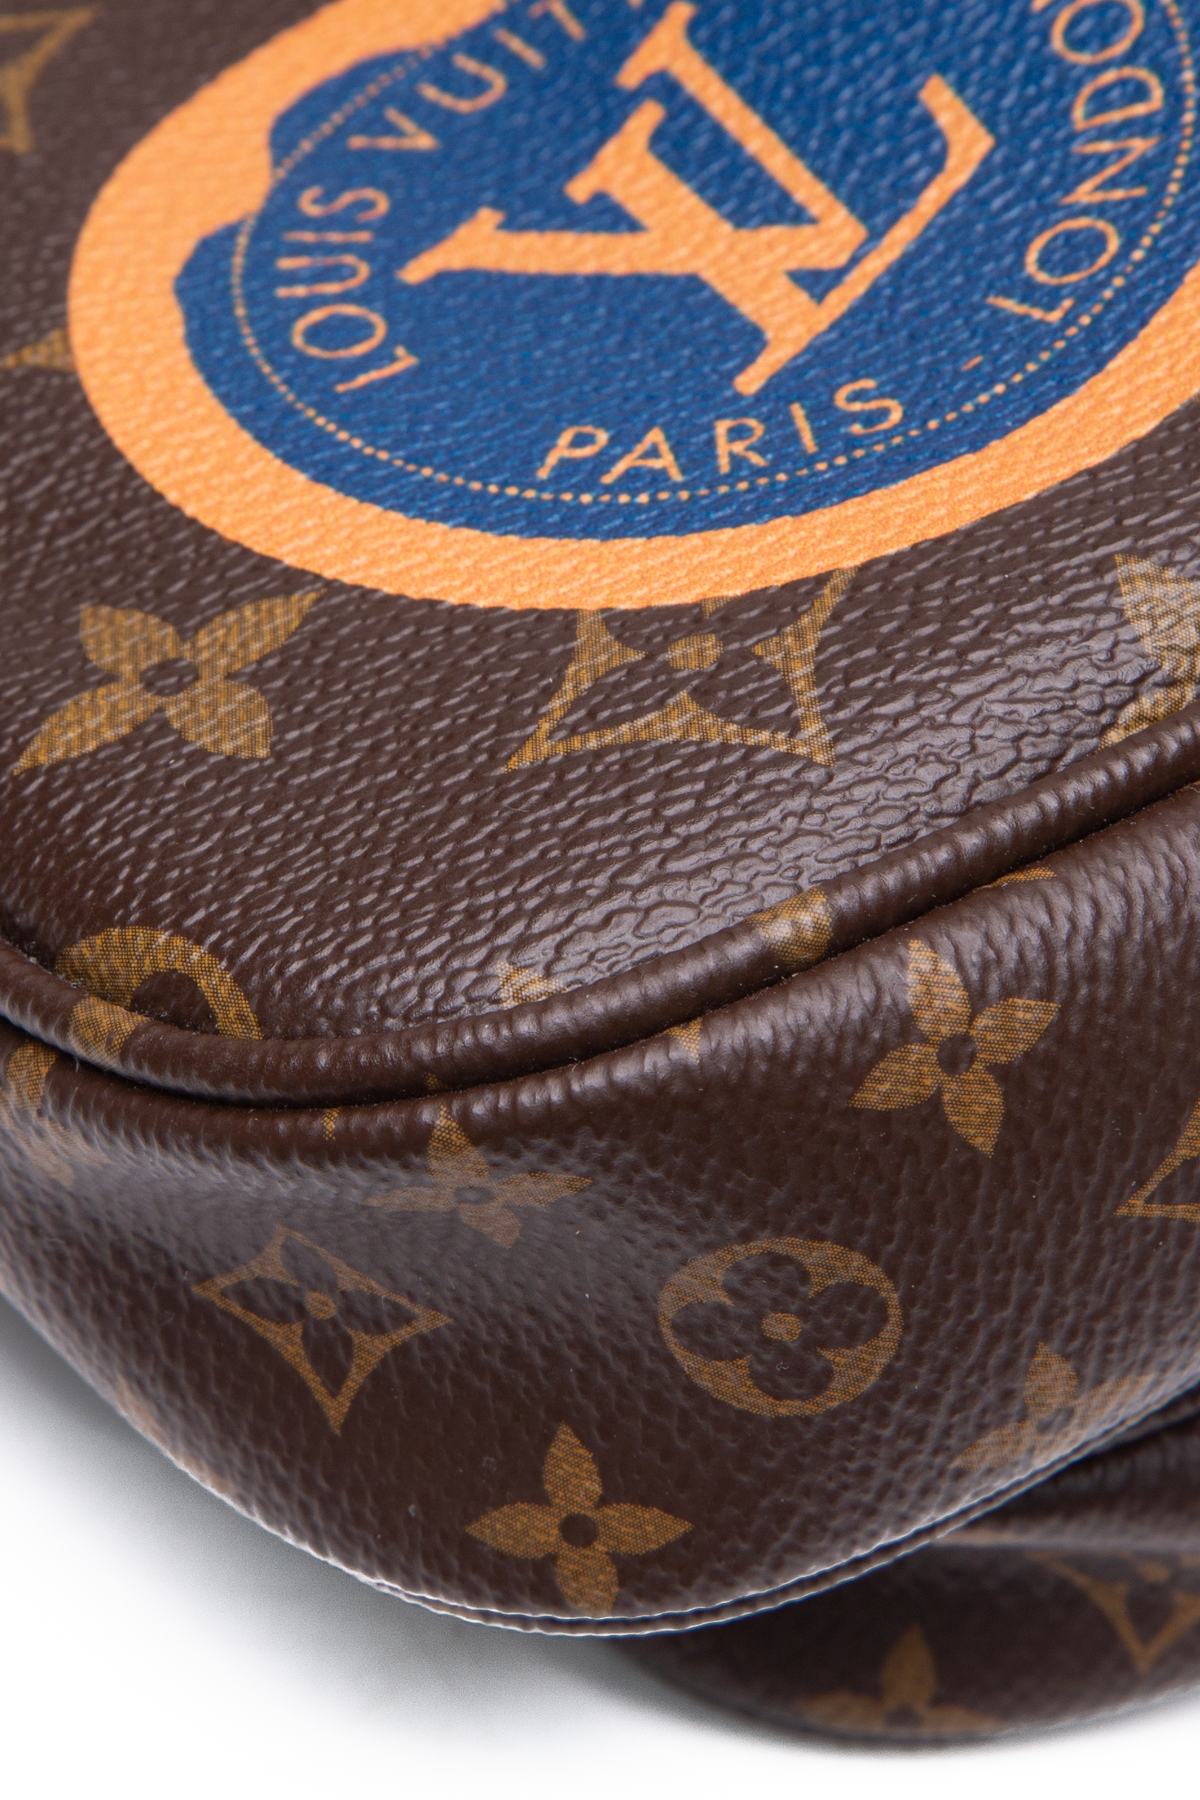 11 Best Louis Vuitton Crossbody Bags To Buy: Multi-Pochette & More